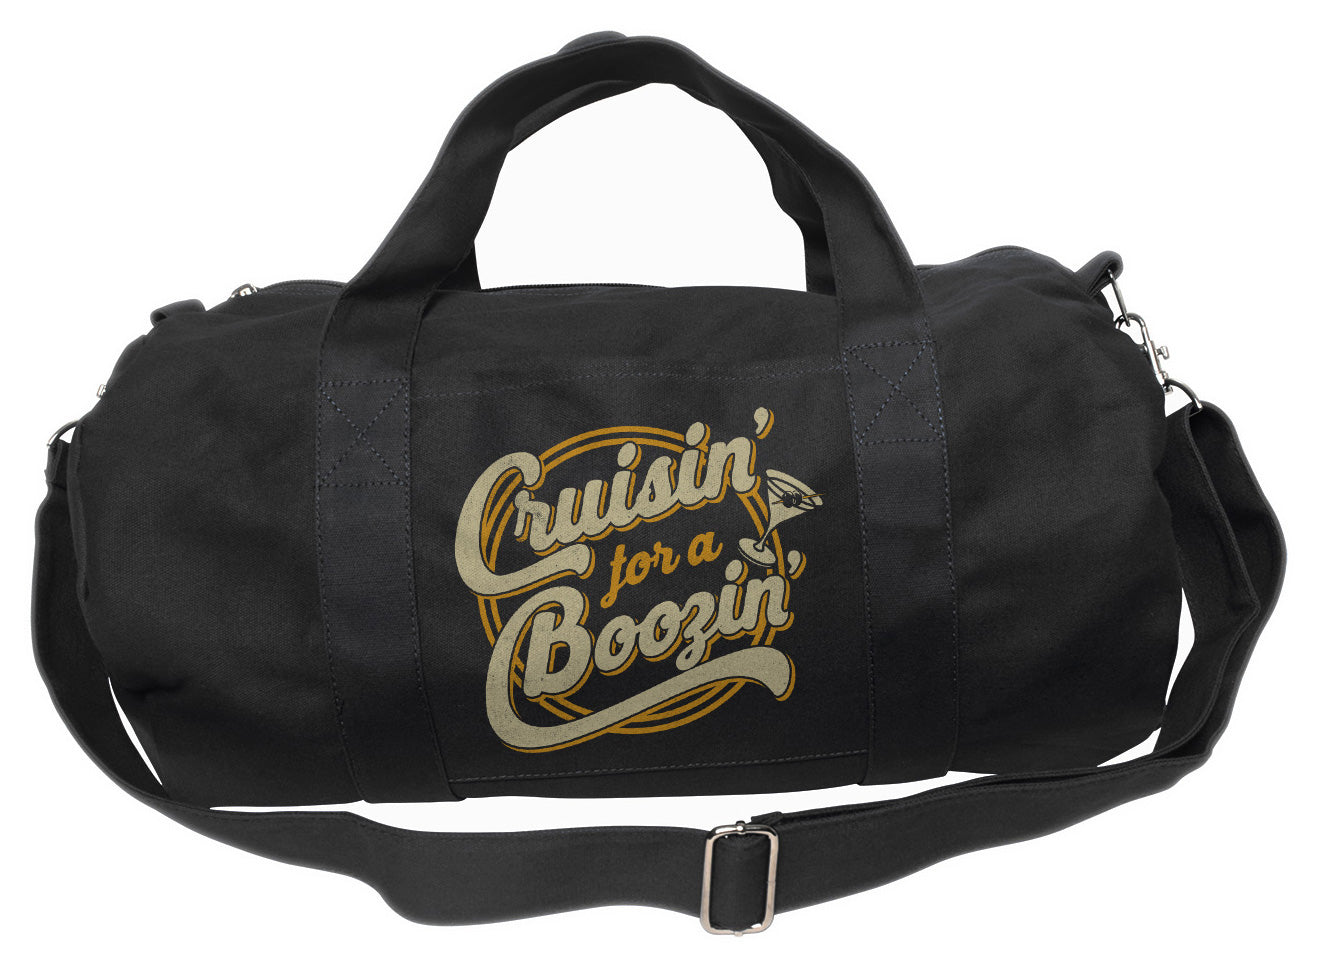 Cruisin for a Boozin Duffel Bag